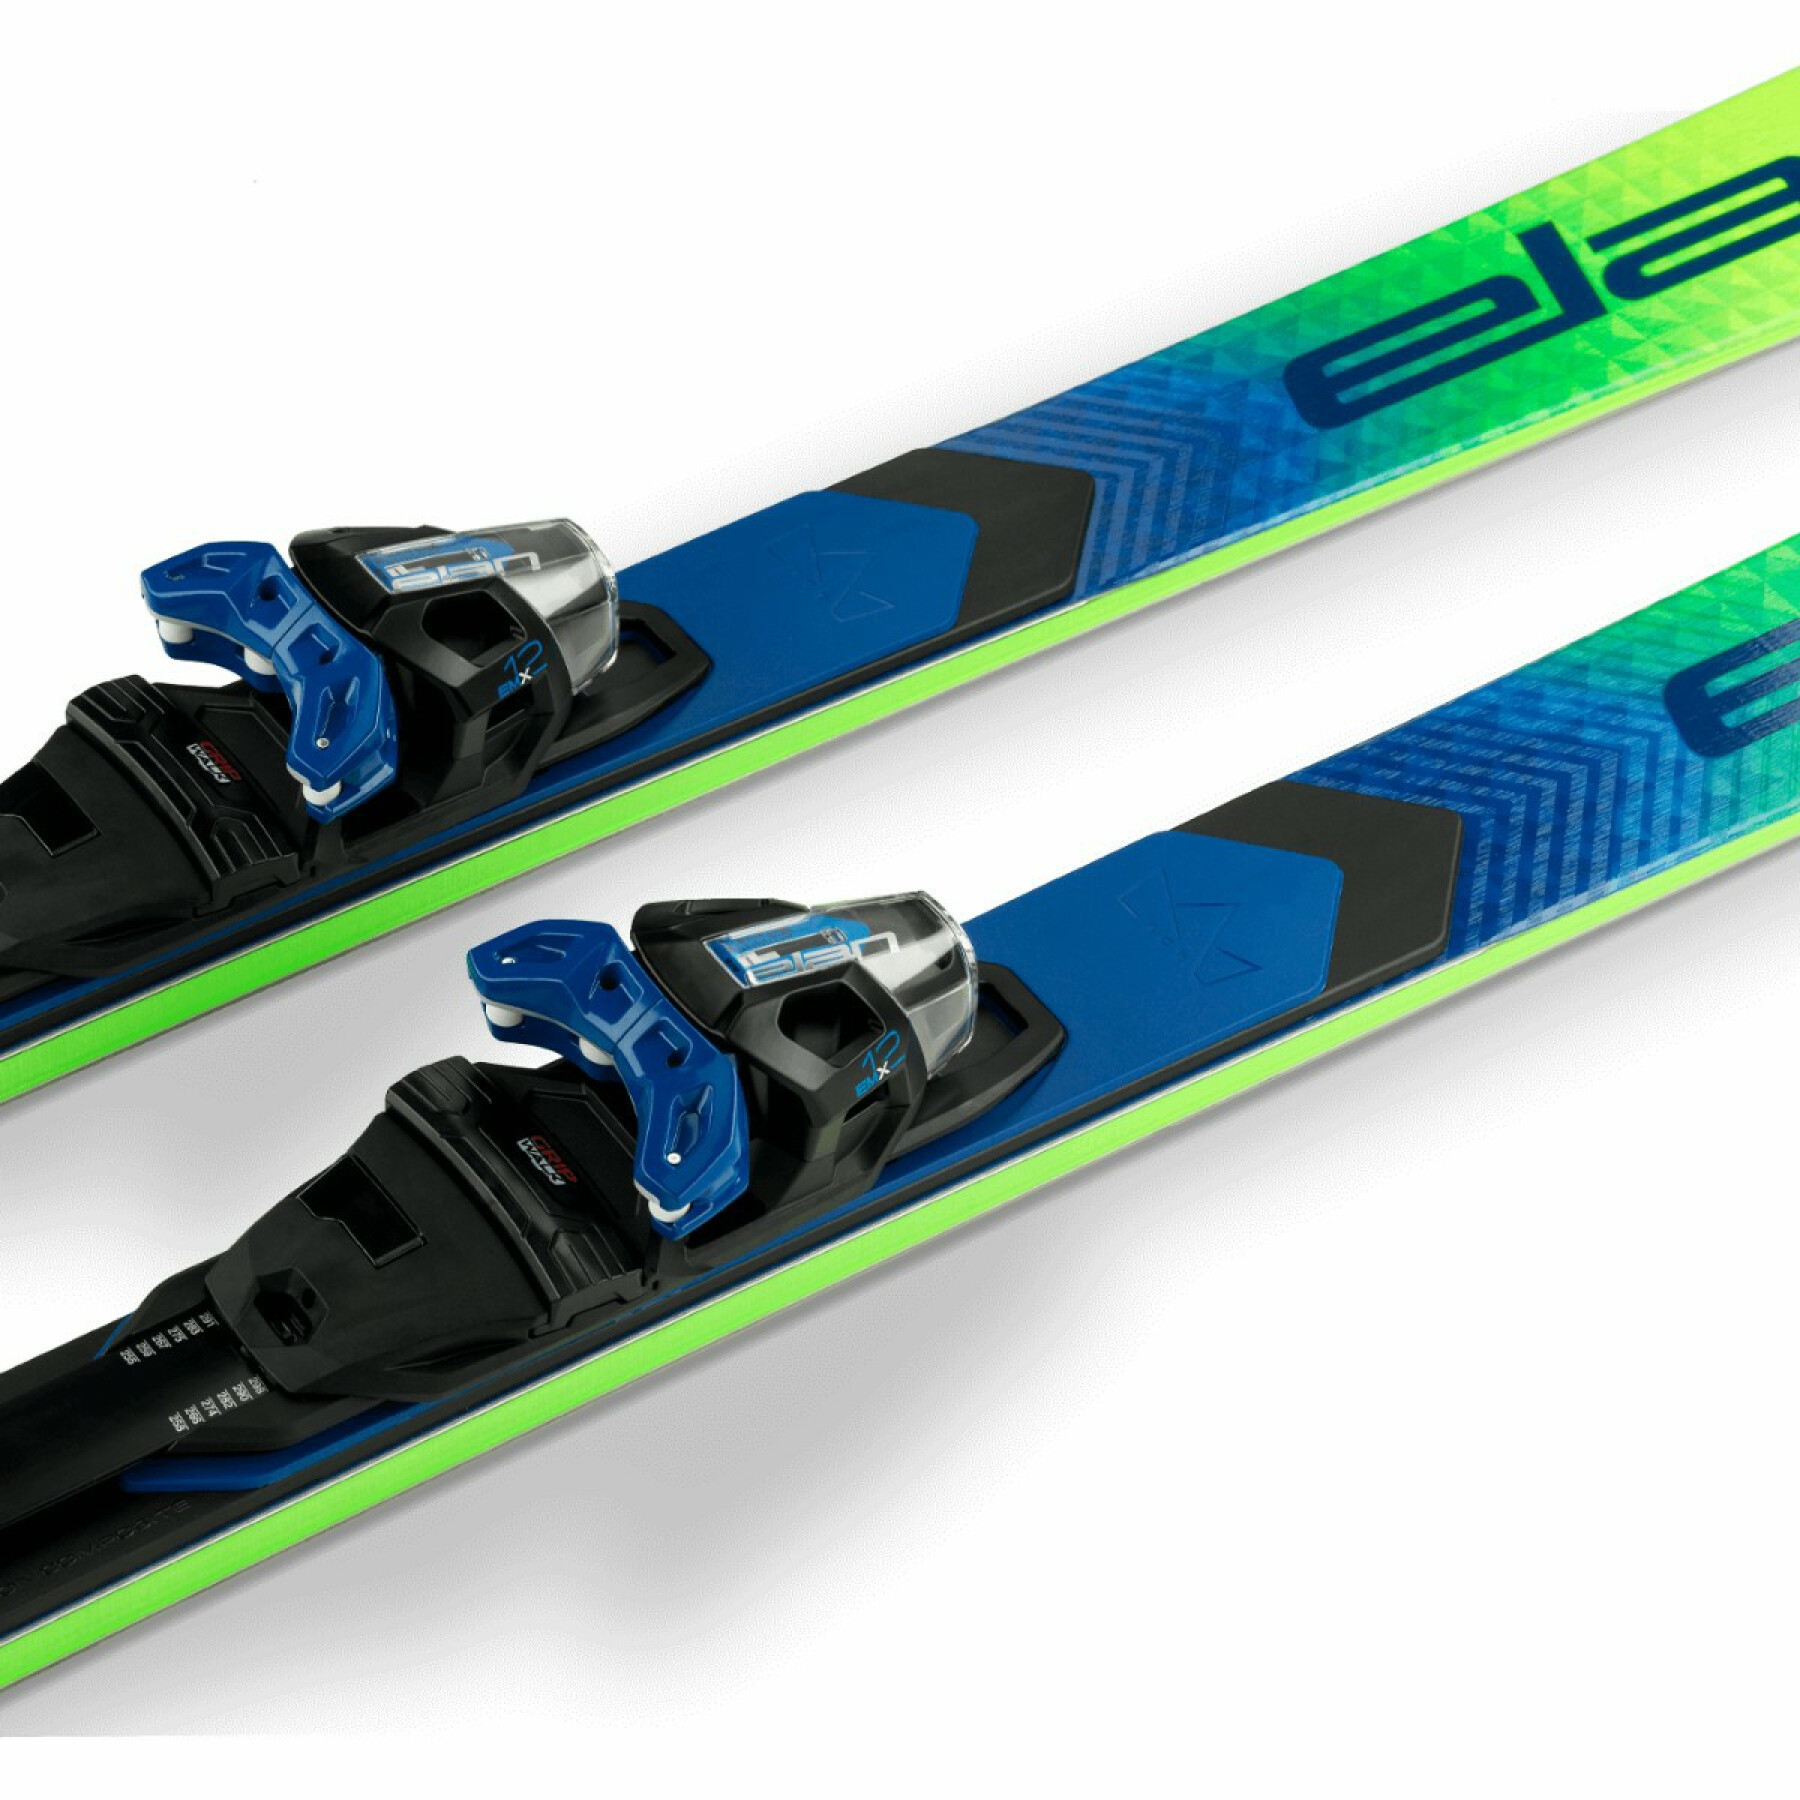 ace gsx fusion x ski pack with bindings Elan